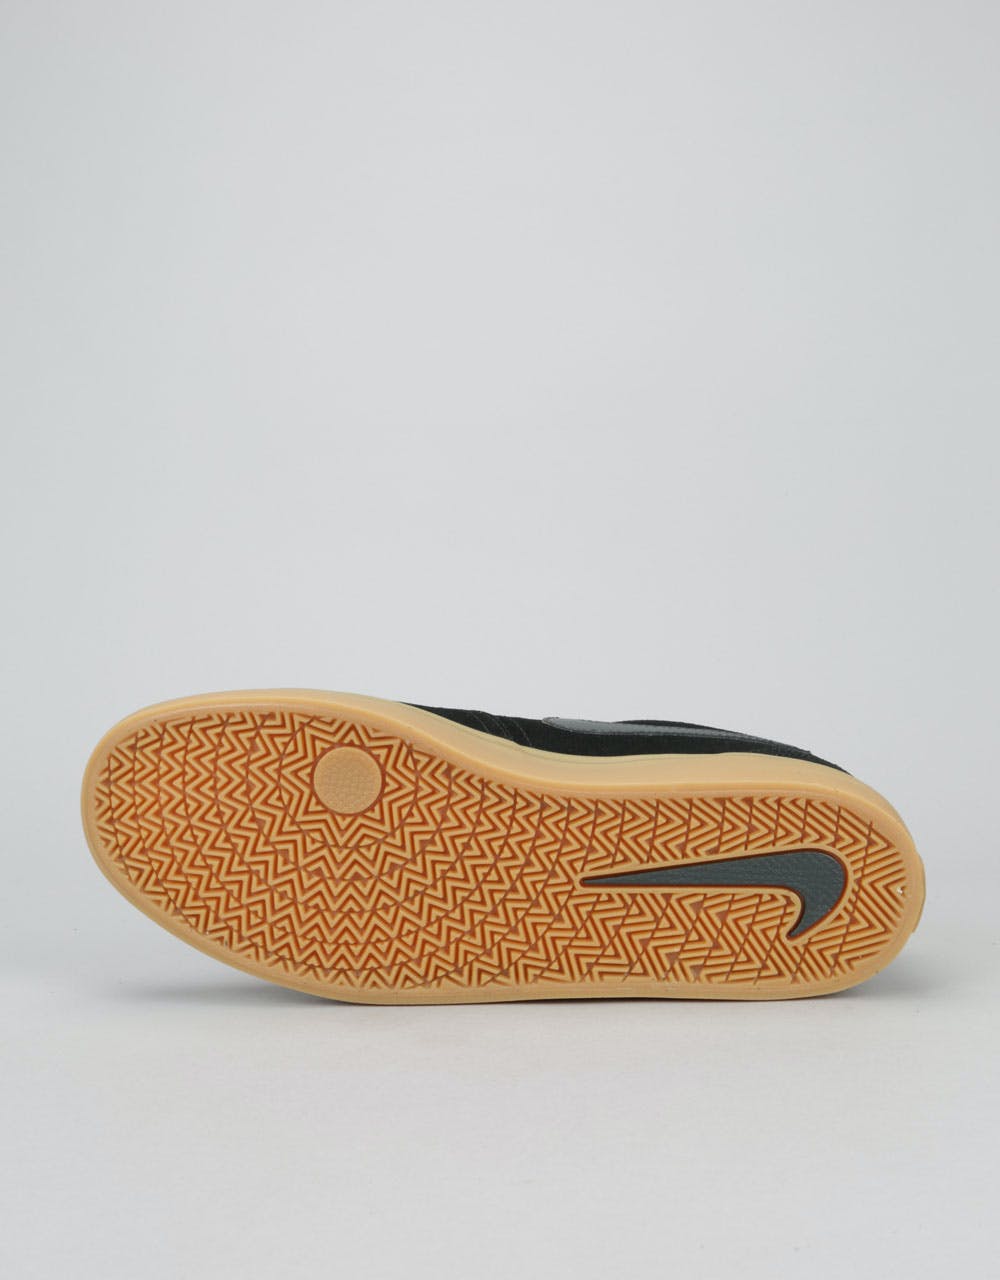 Nike SB Check Solarsoft Skate Shoes - Black/Anthracite -Gum Dark Brown